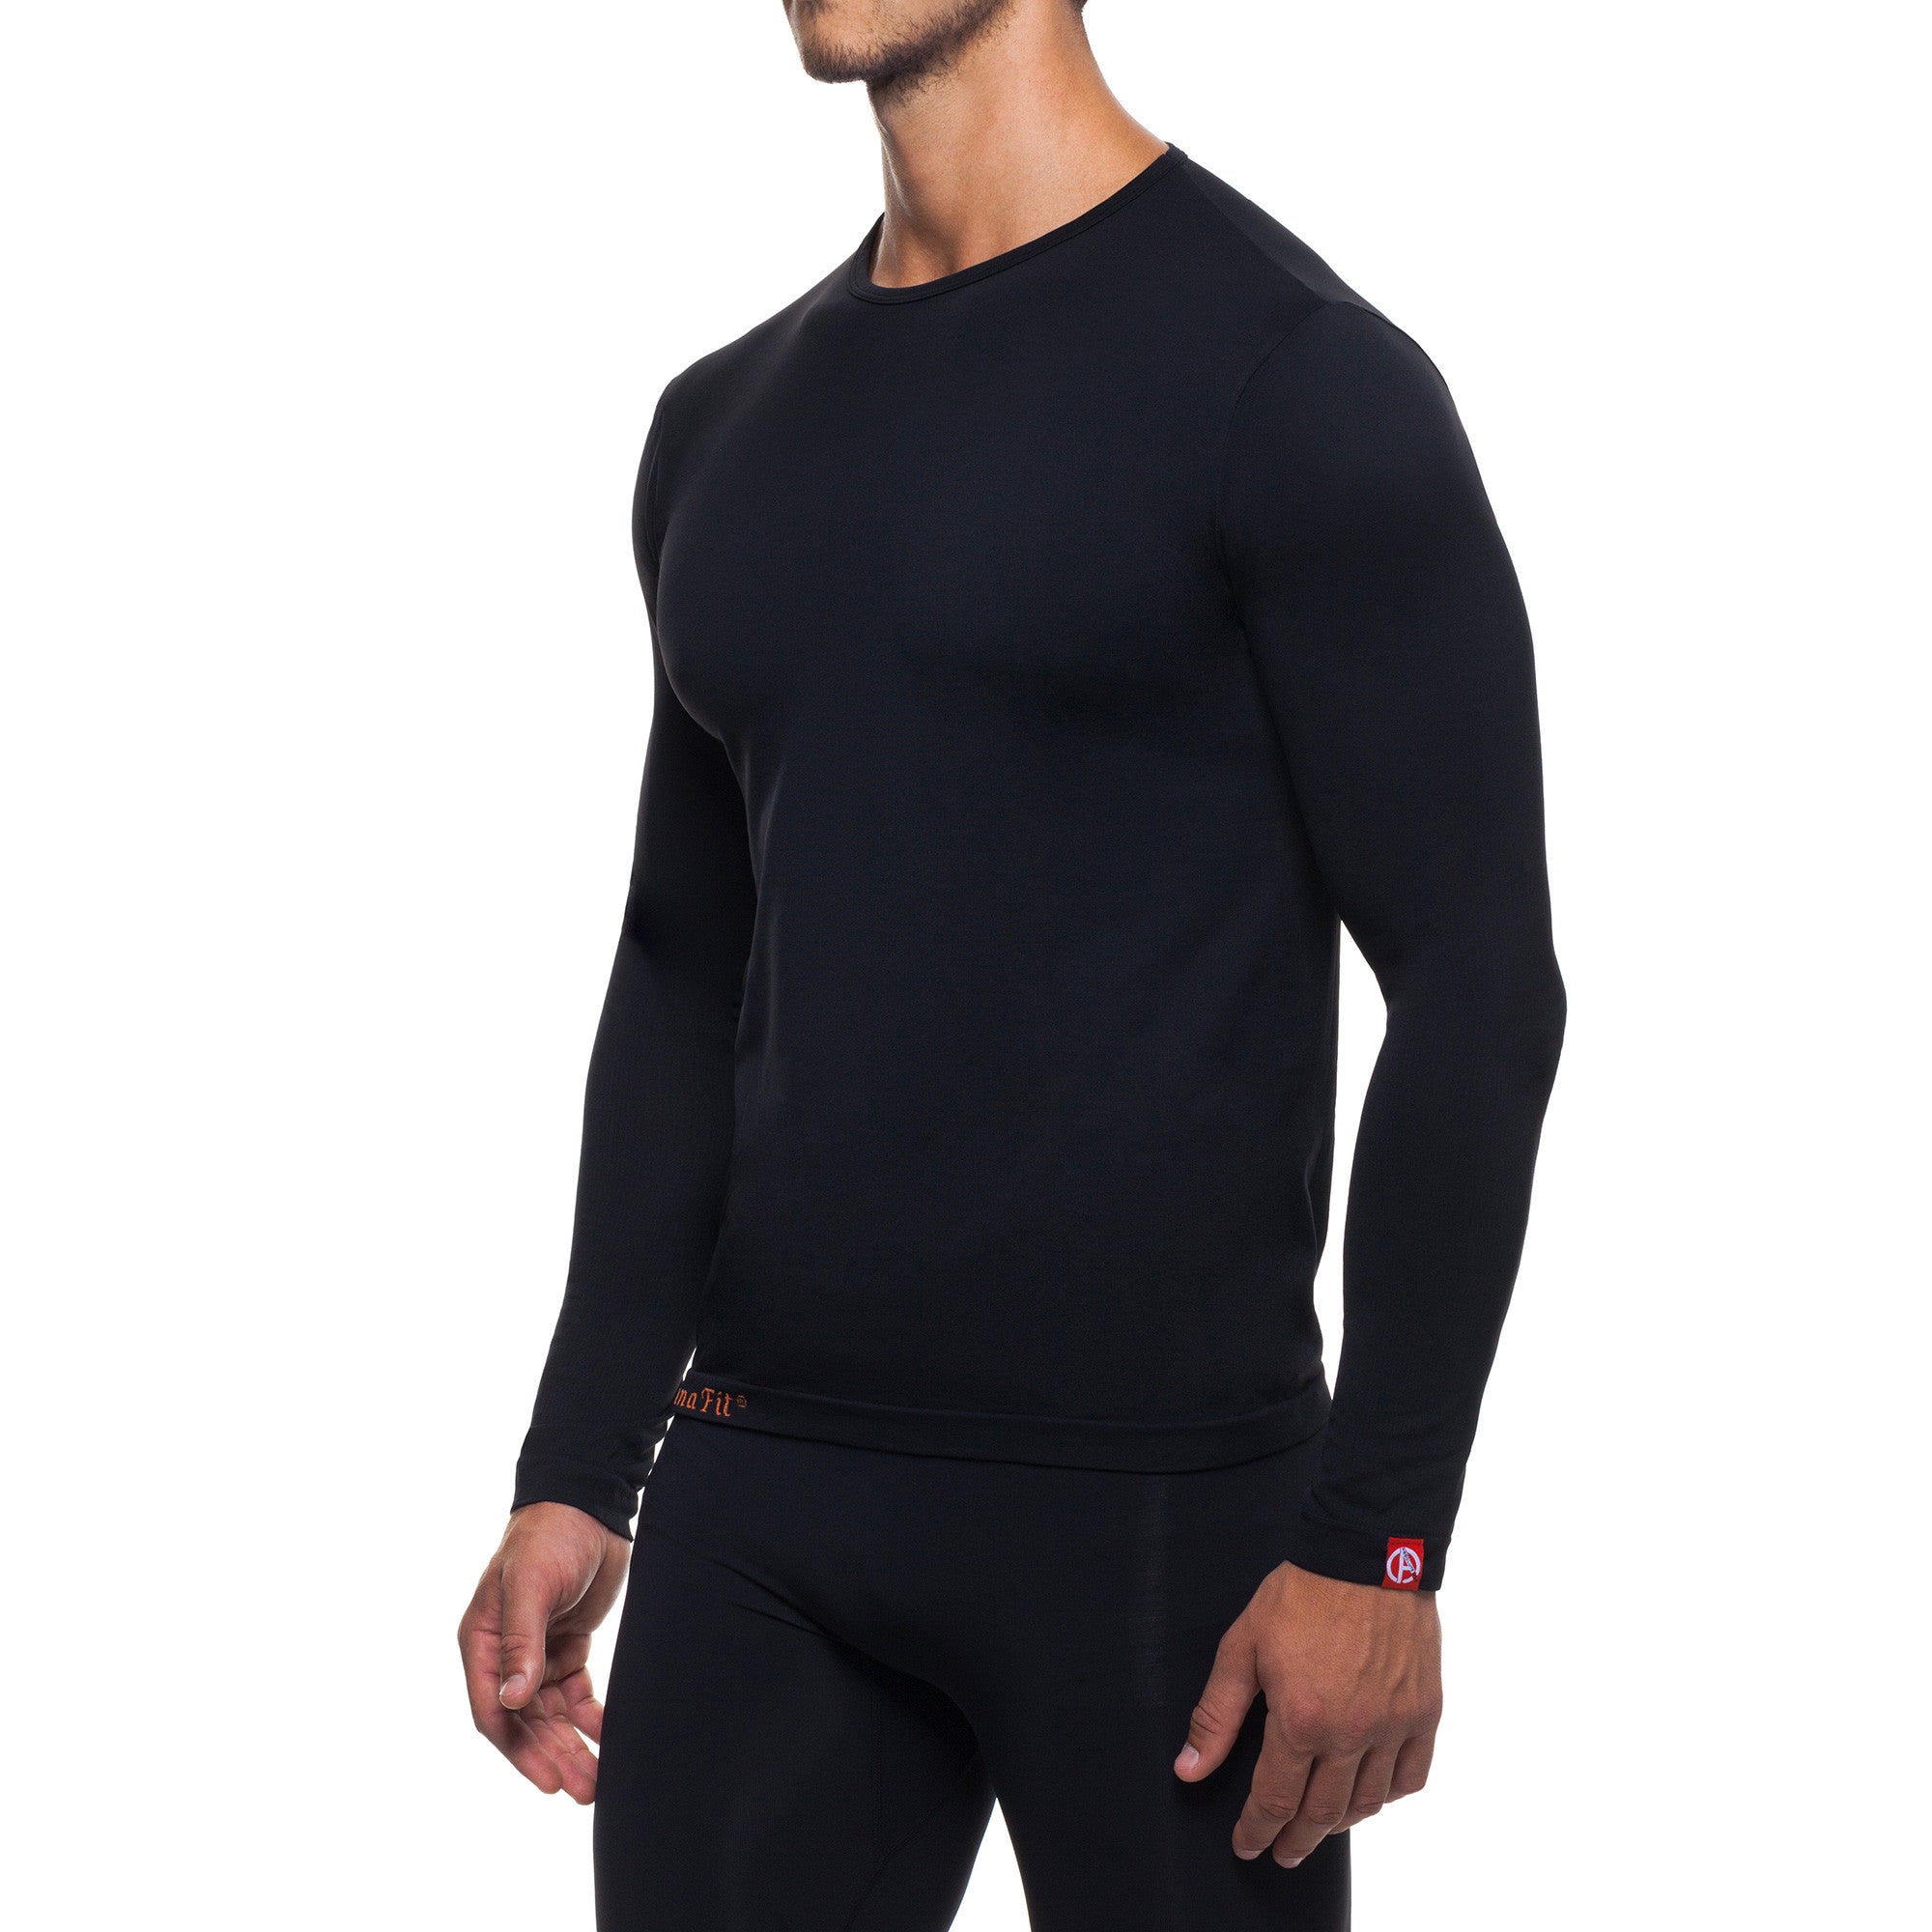 Absolute 360 Men's IR T-Shirt Long Sleeved : Black - Extra Large